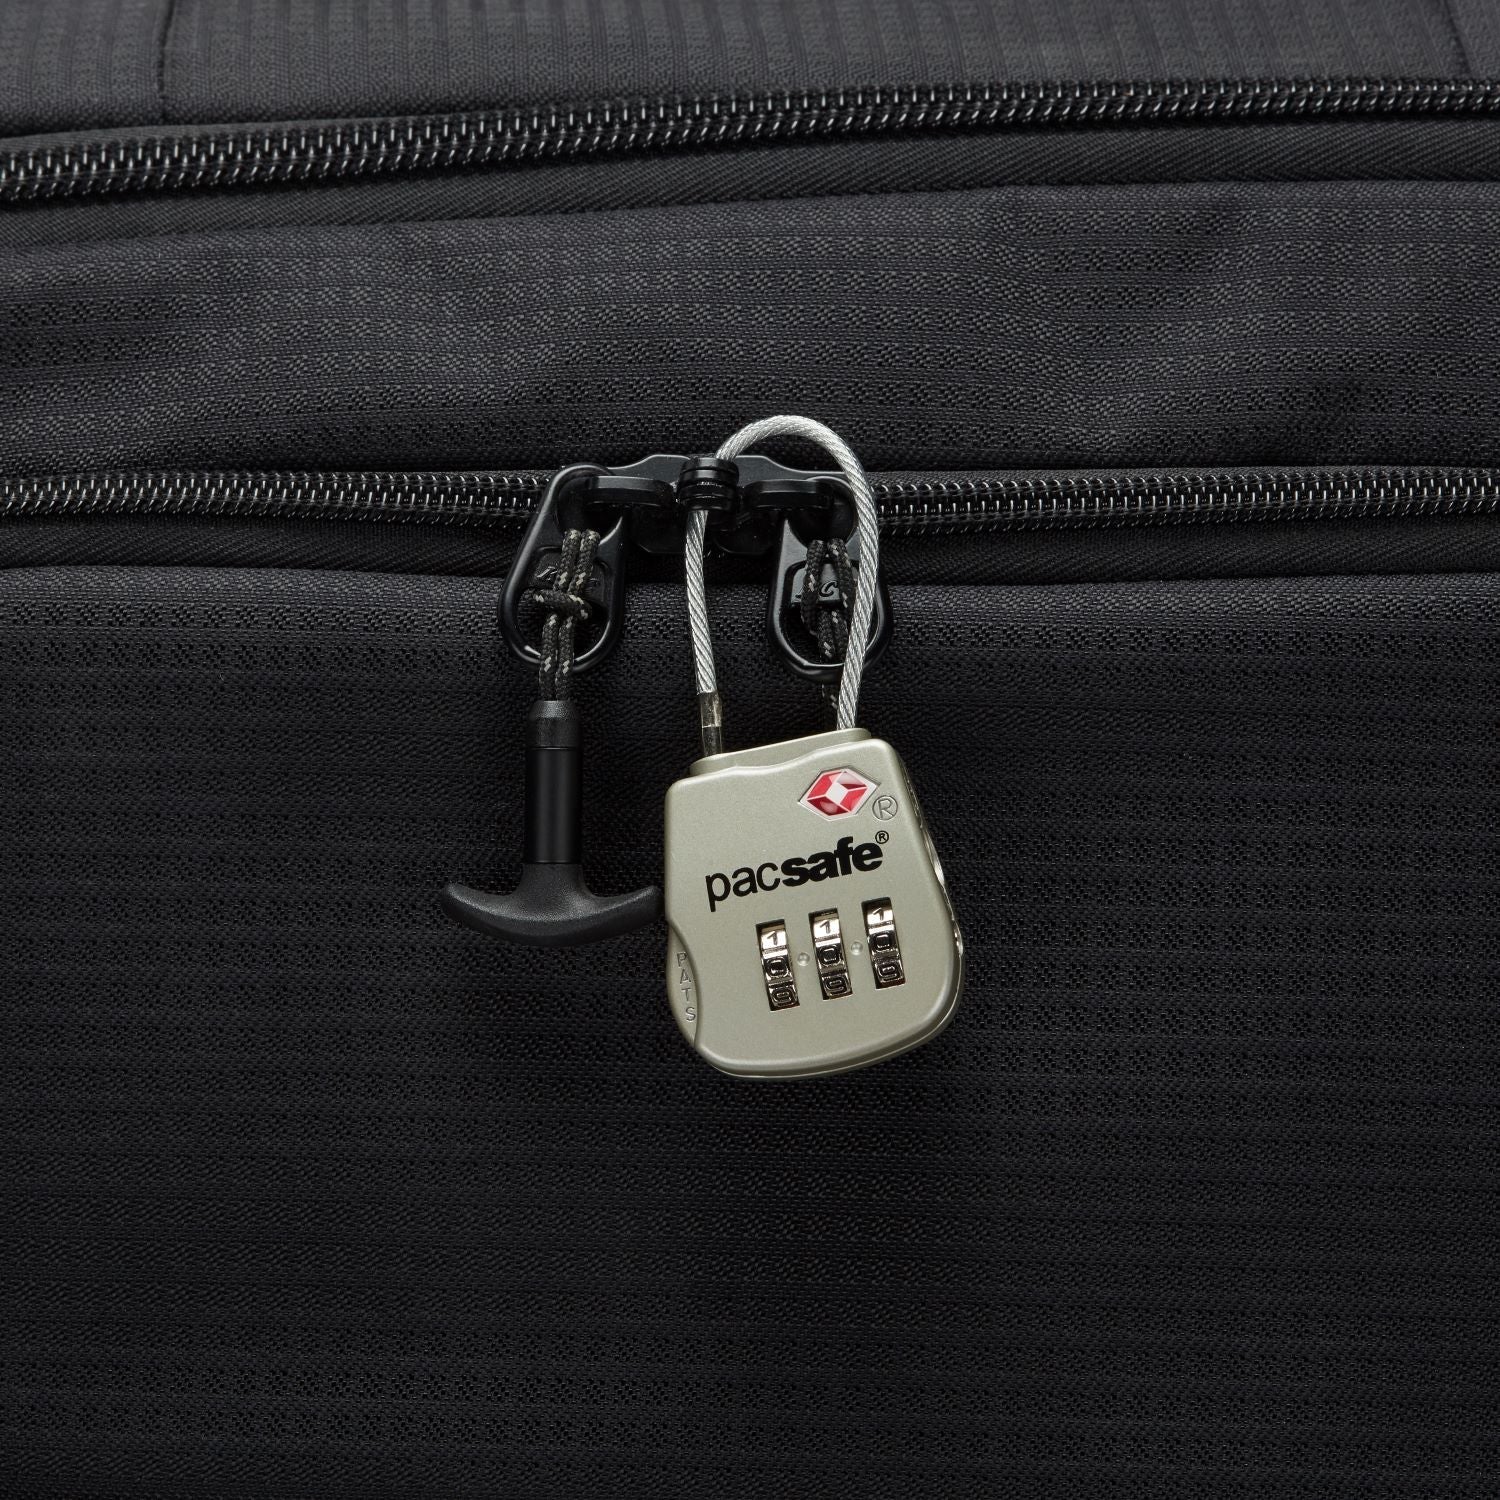 Prosafe 800 TSA Combination Cable Padlock, Silver